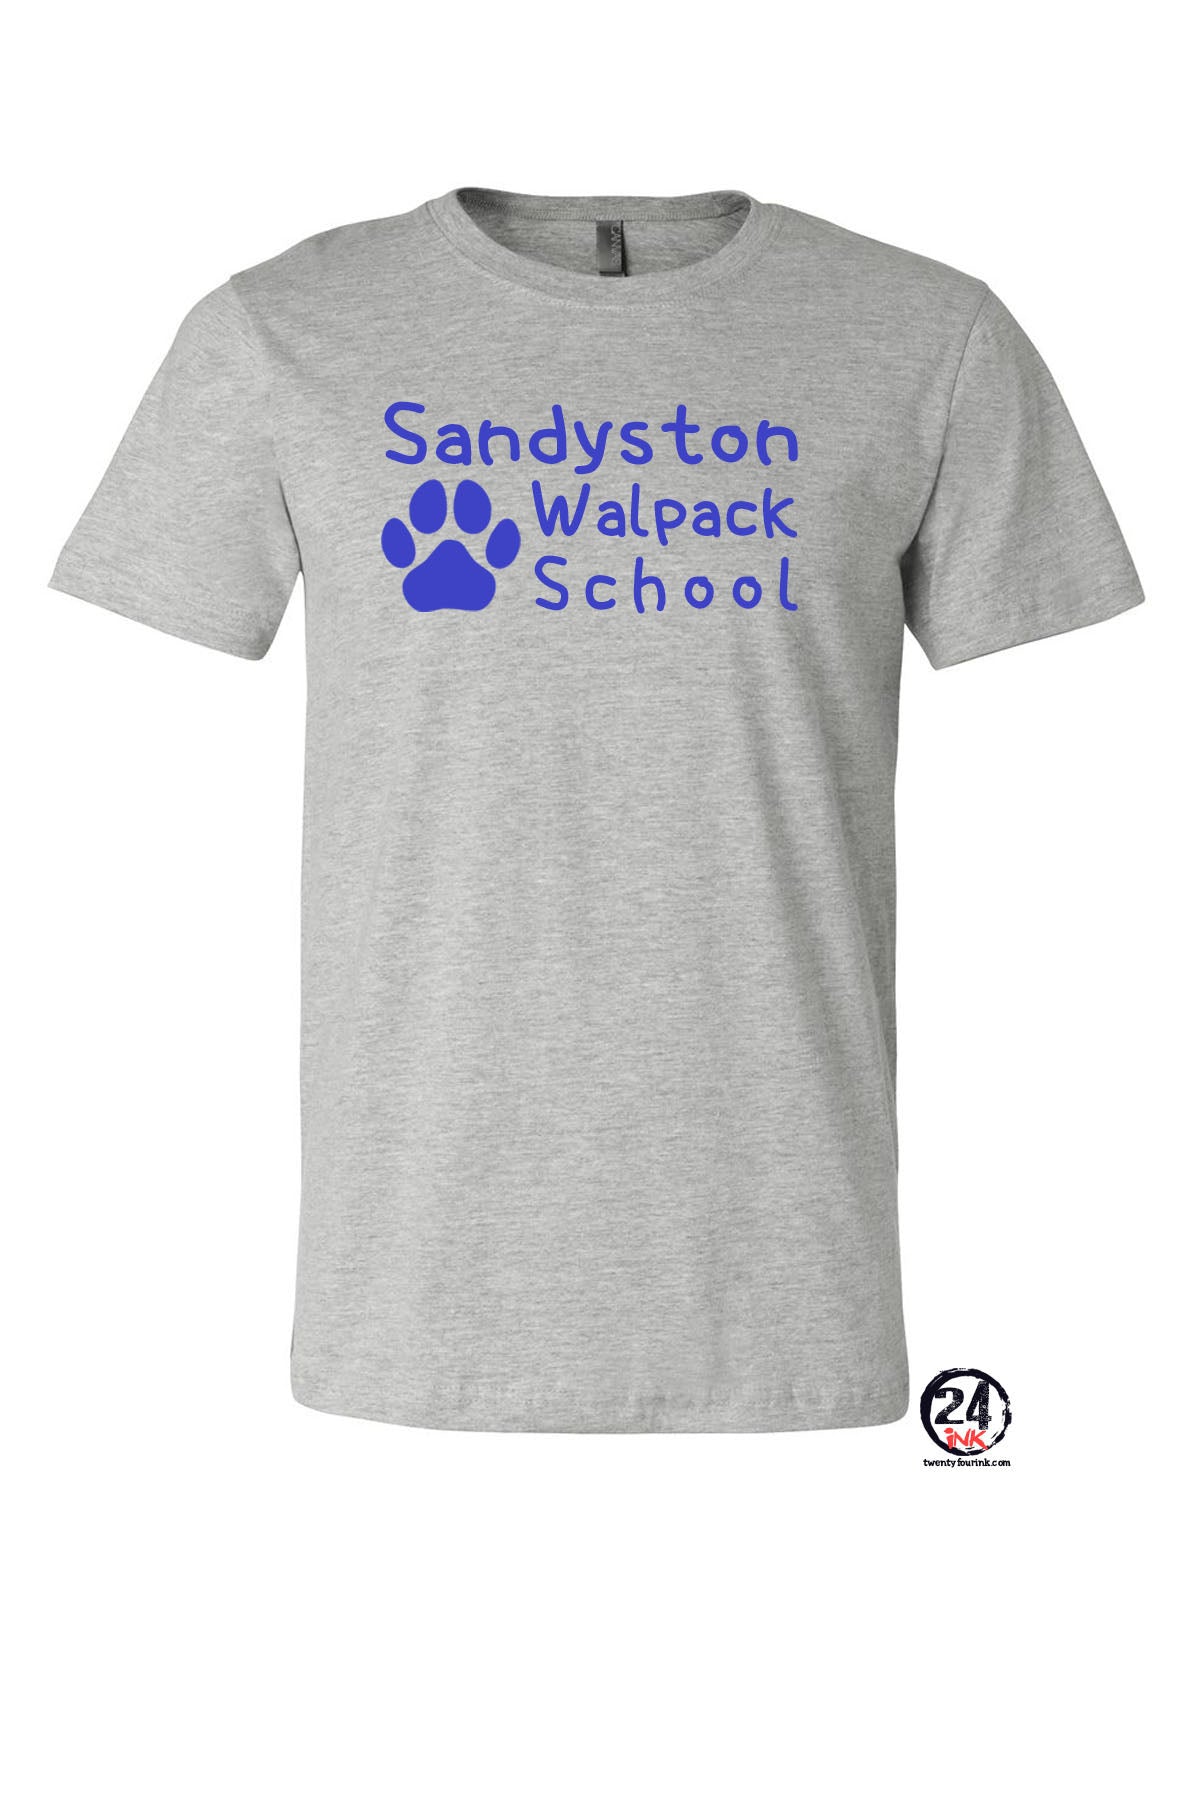 Sandyston Walpack Design 3 T-Shirt